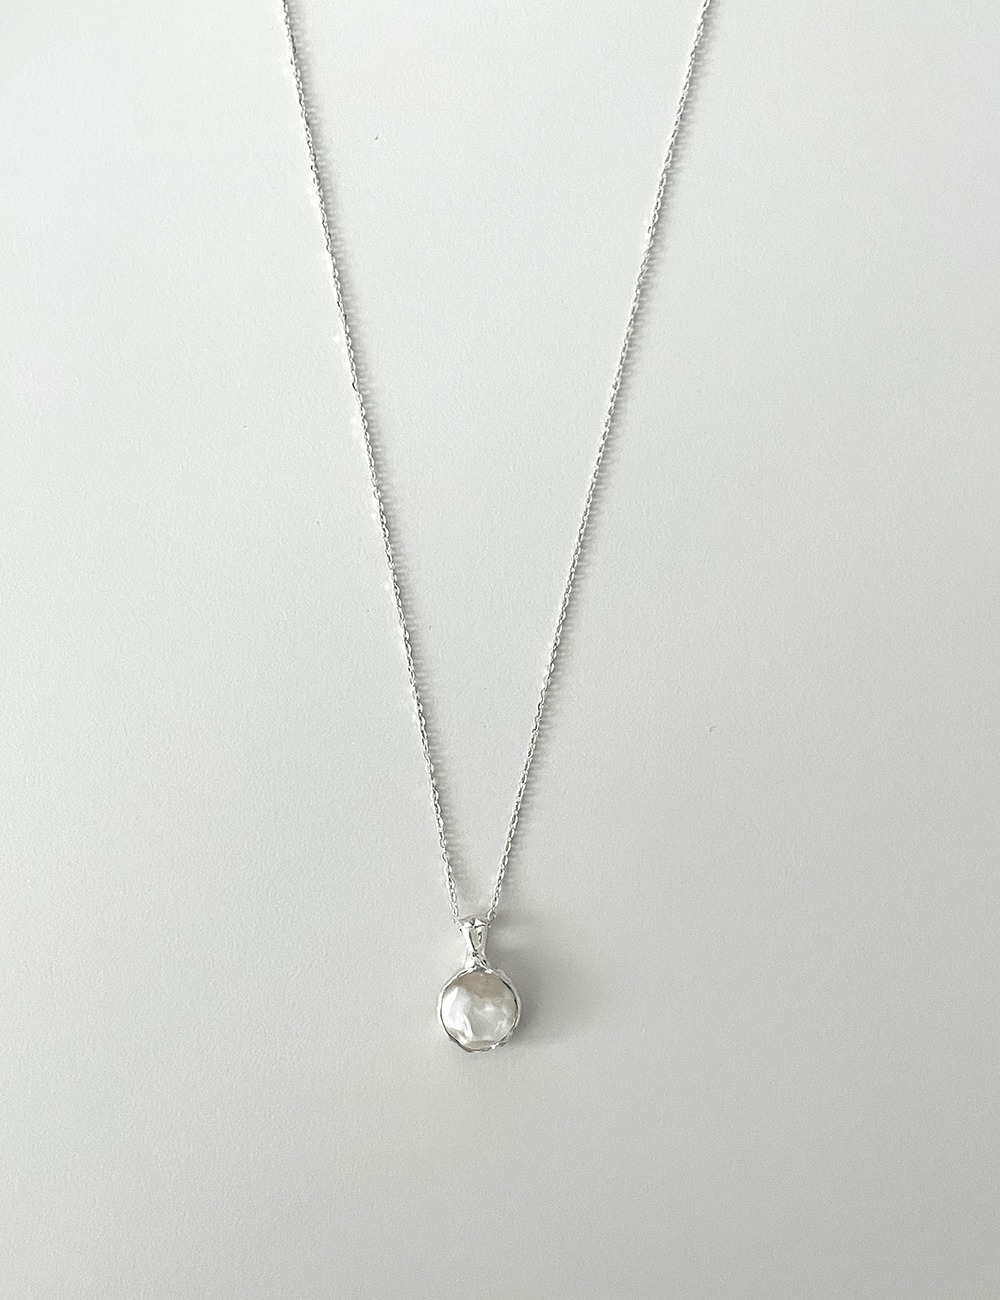 Sherbet necklace